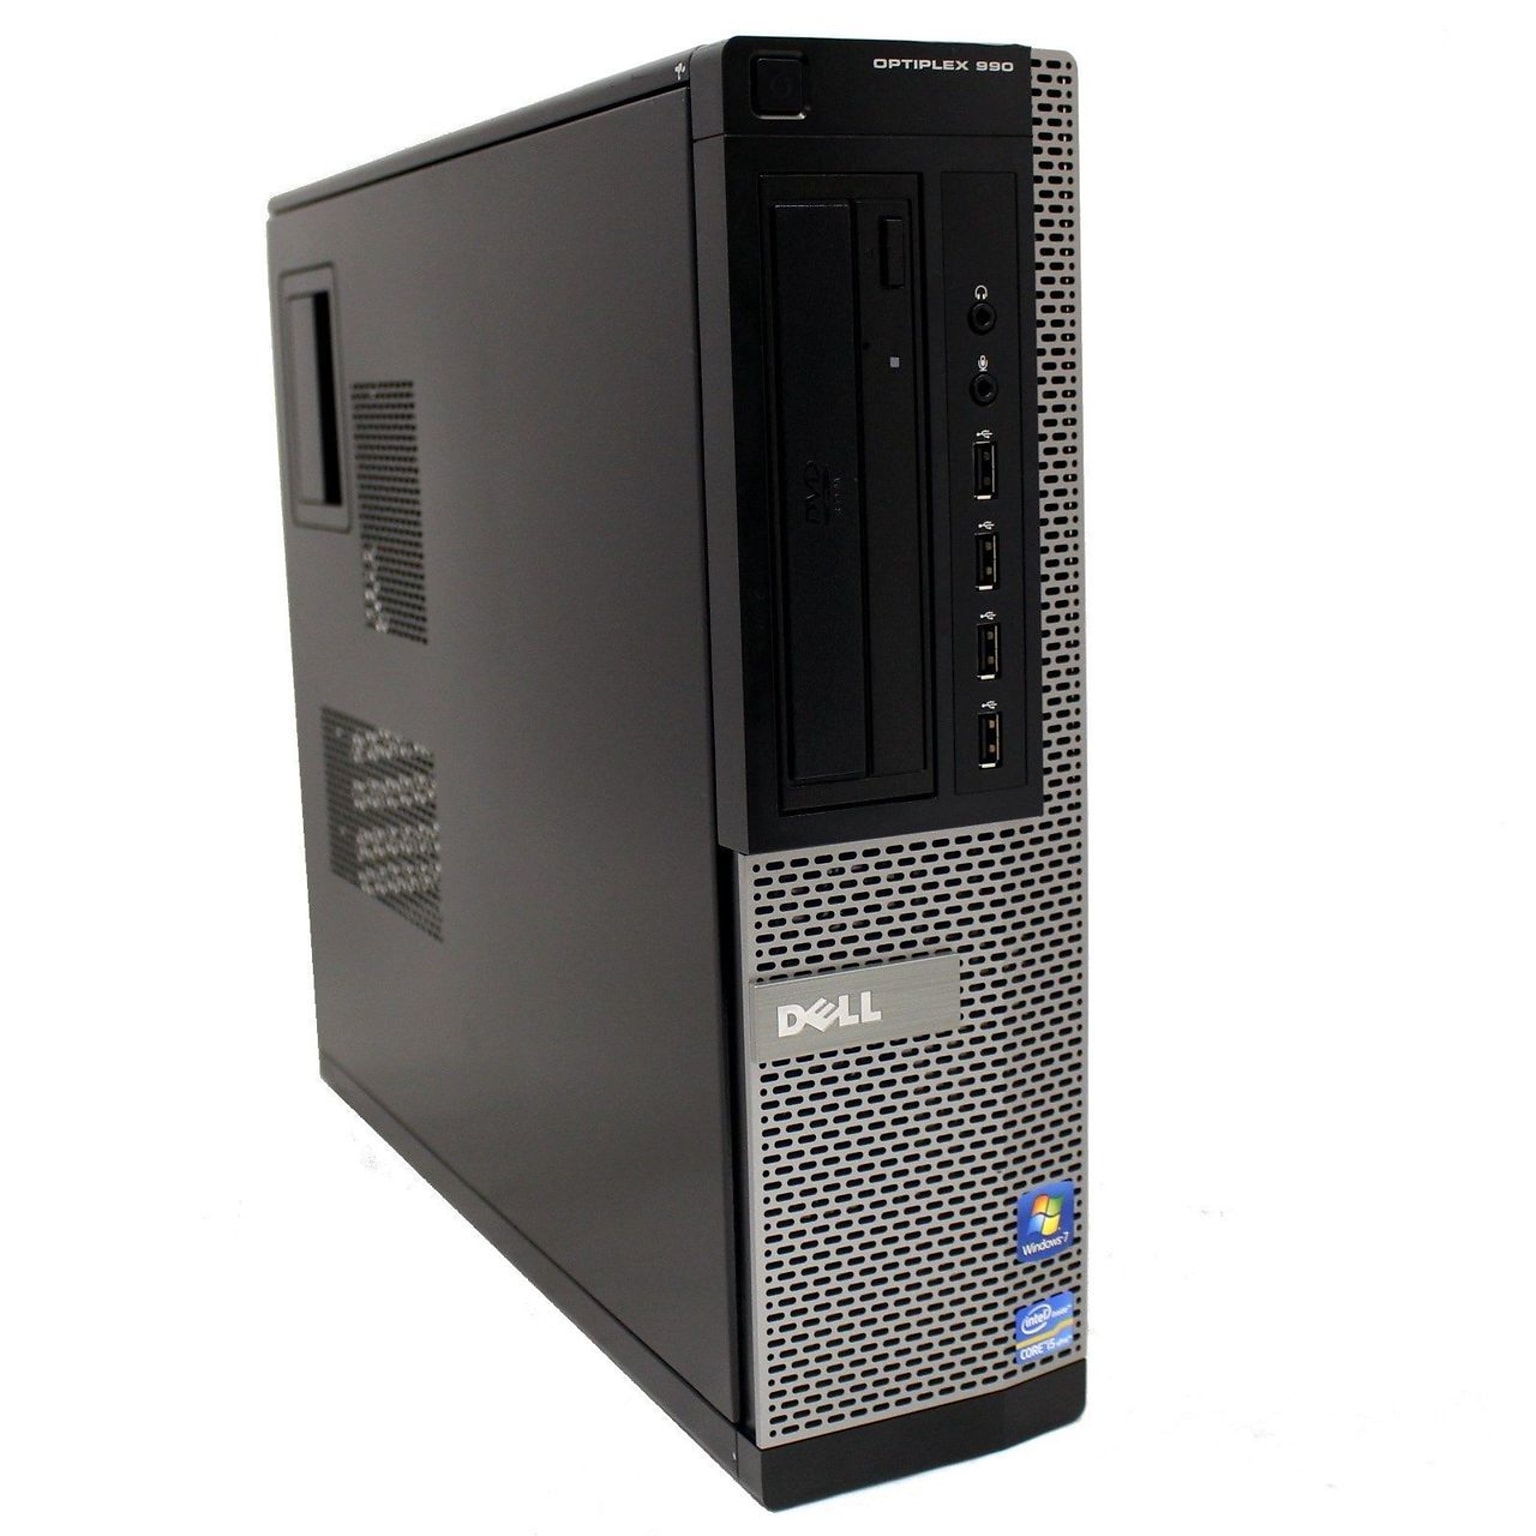 Dell OptiPlex 990 Refurbished Desktop Computer, Intel i5-2400, 8 GB Memory, 500GB HDD, Windows 10 Pro